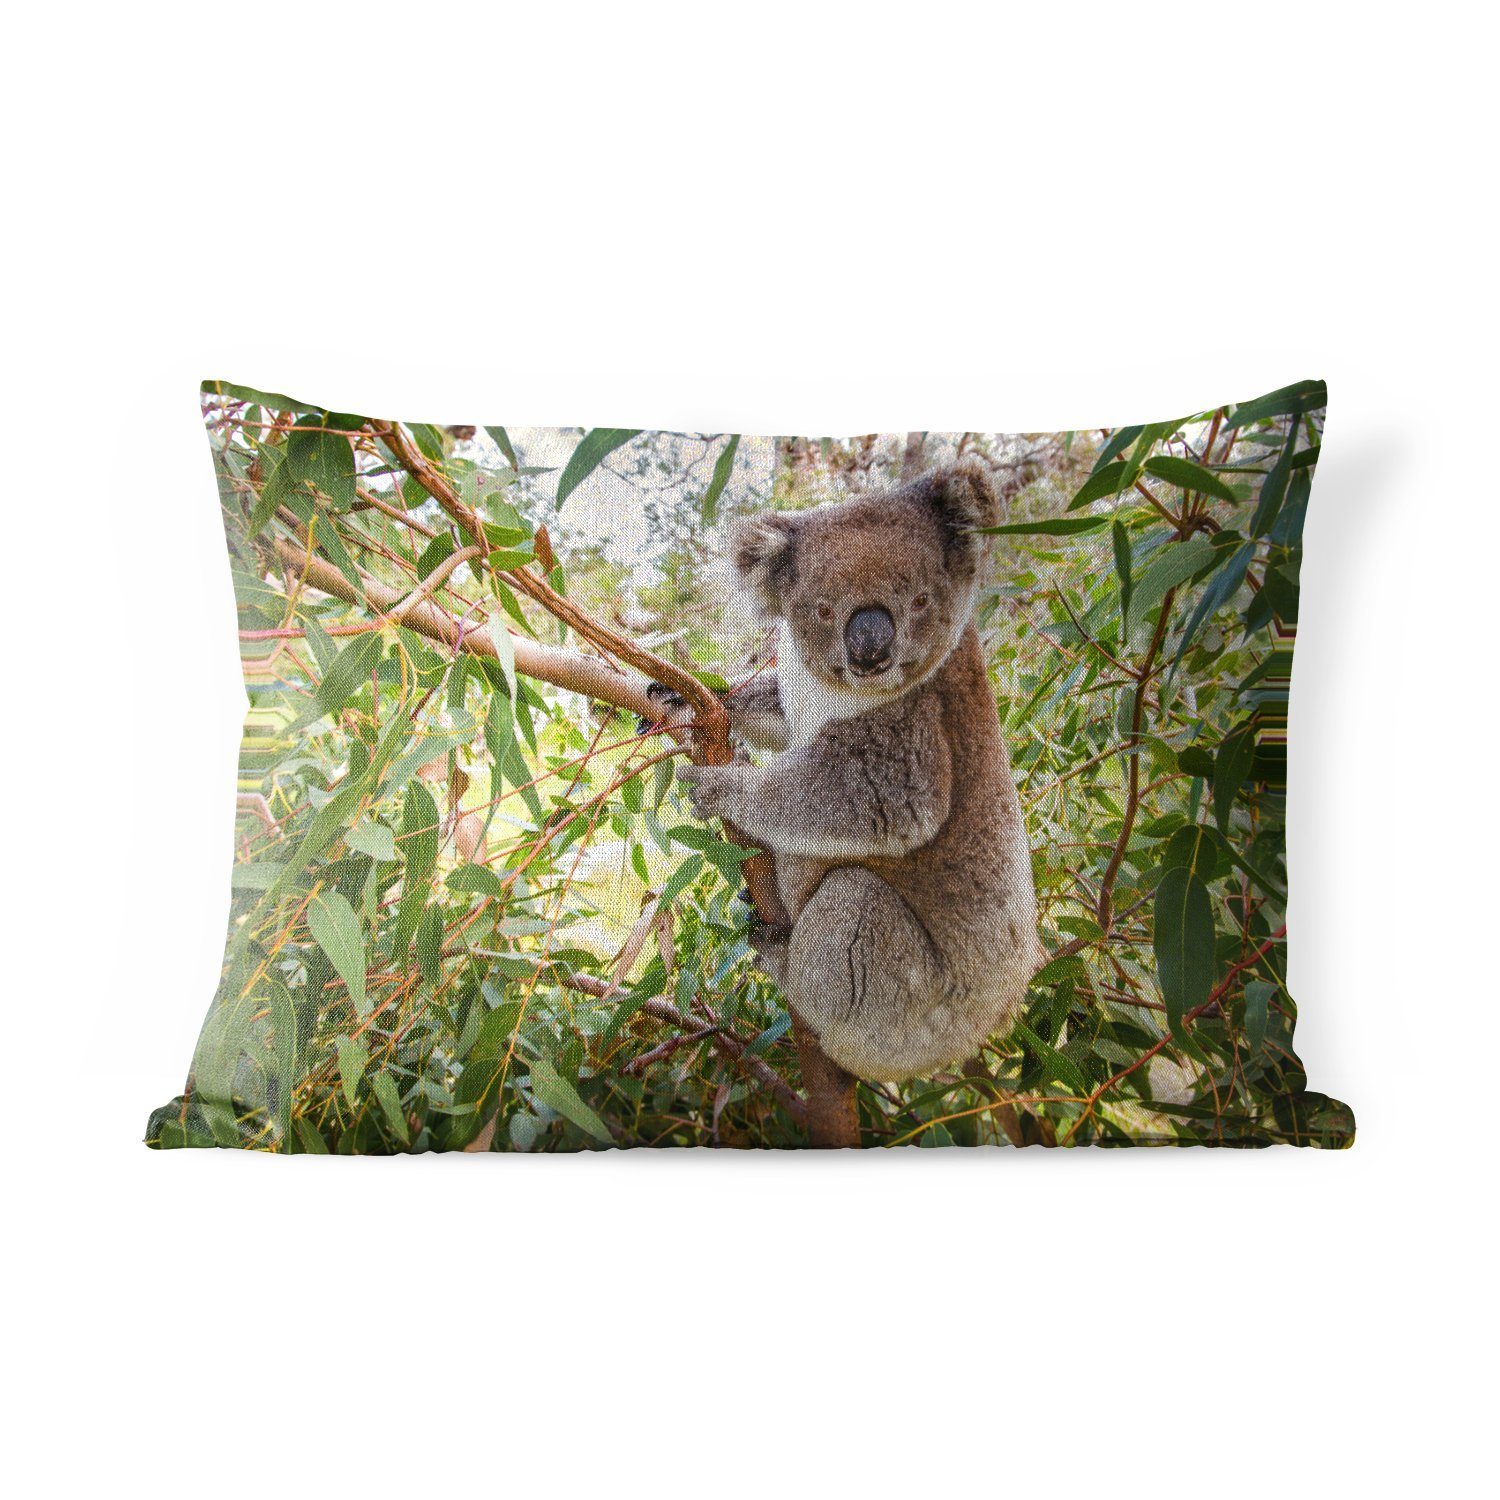 MuchoWow Dekokissen Koala - Blätter - Kinder - Jungen - Mädchen, Outdoor-Dekorationskissen, Polyester, Dekokissenbezug, Kissenhülle